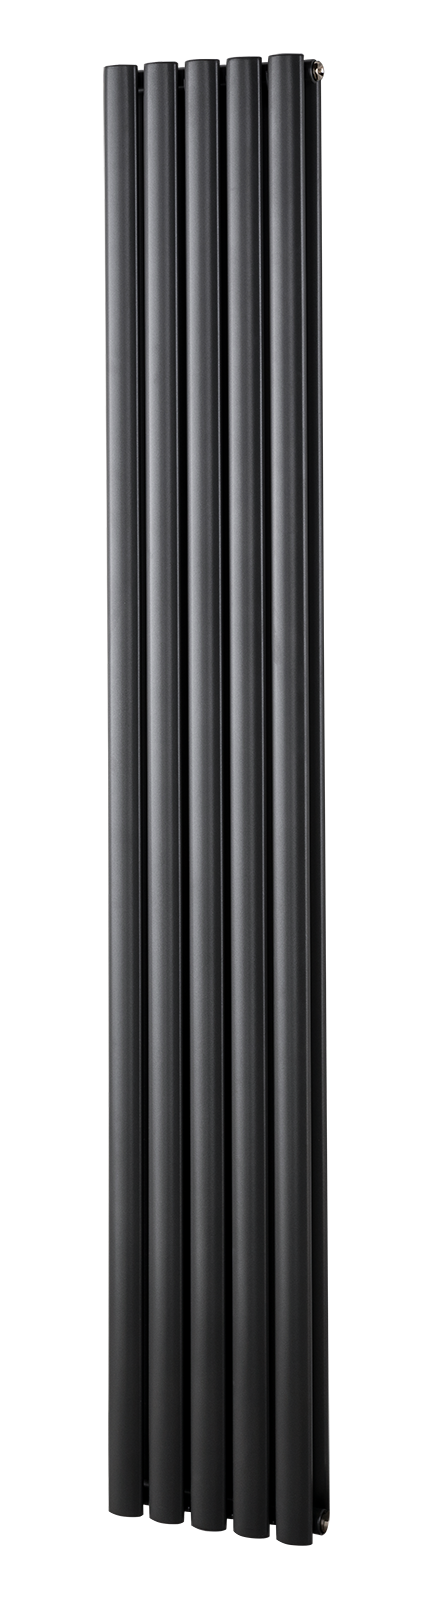 Oval tube single radiator